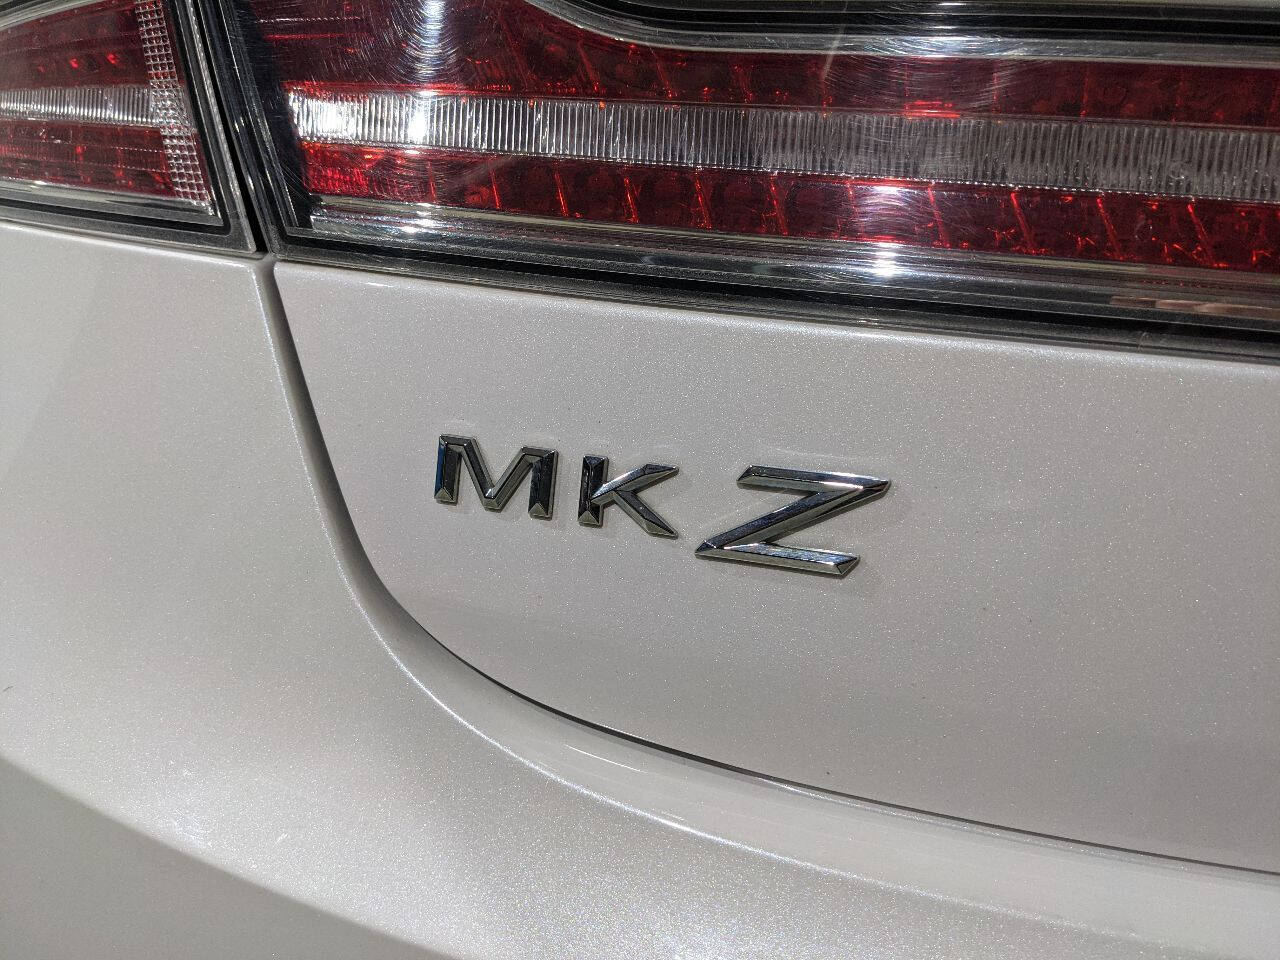 2017 Lincoln MKZ